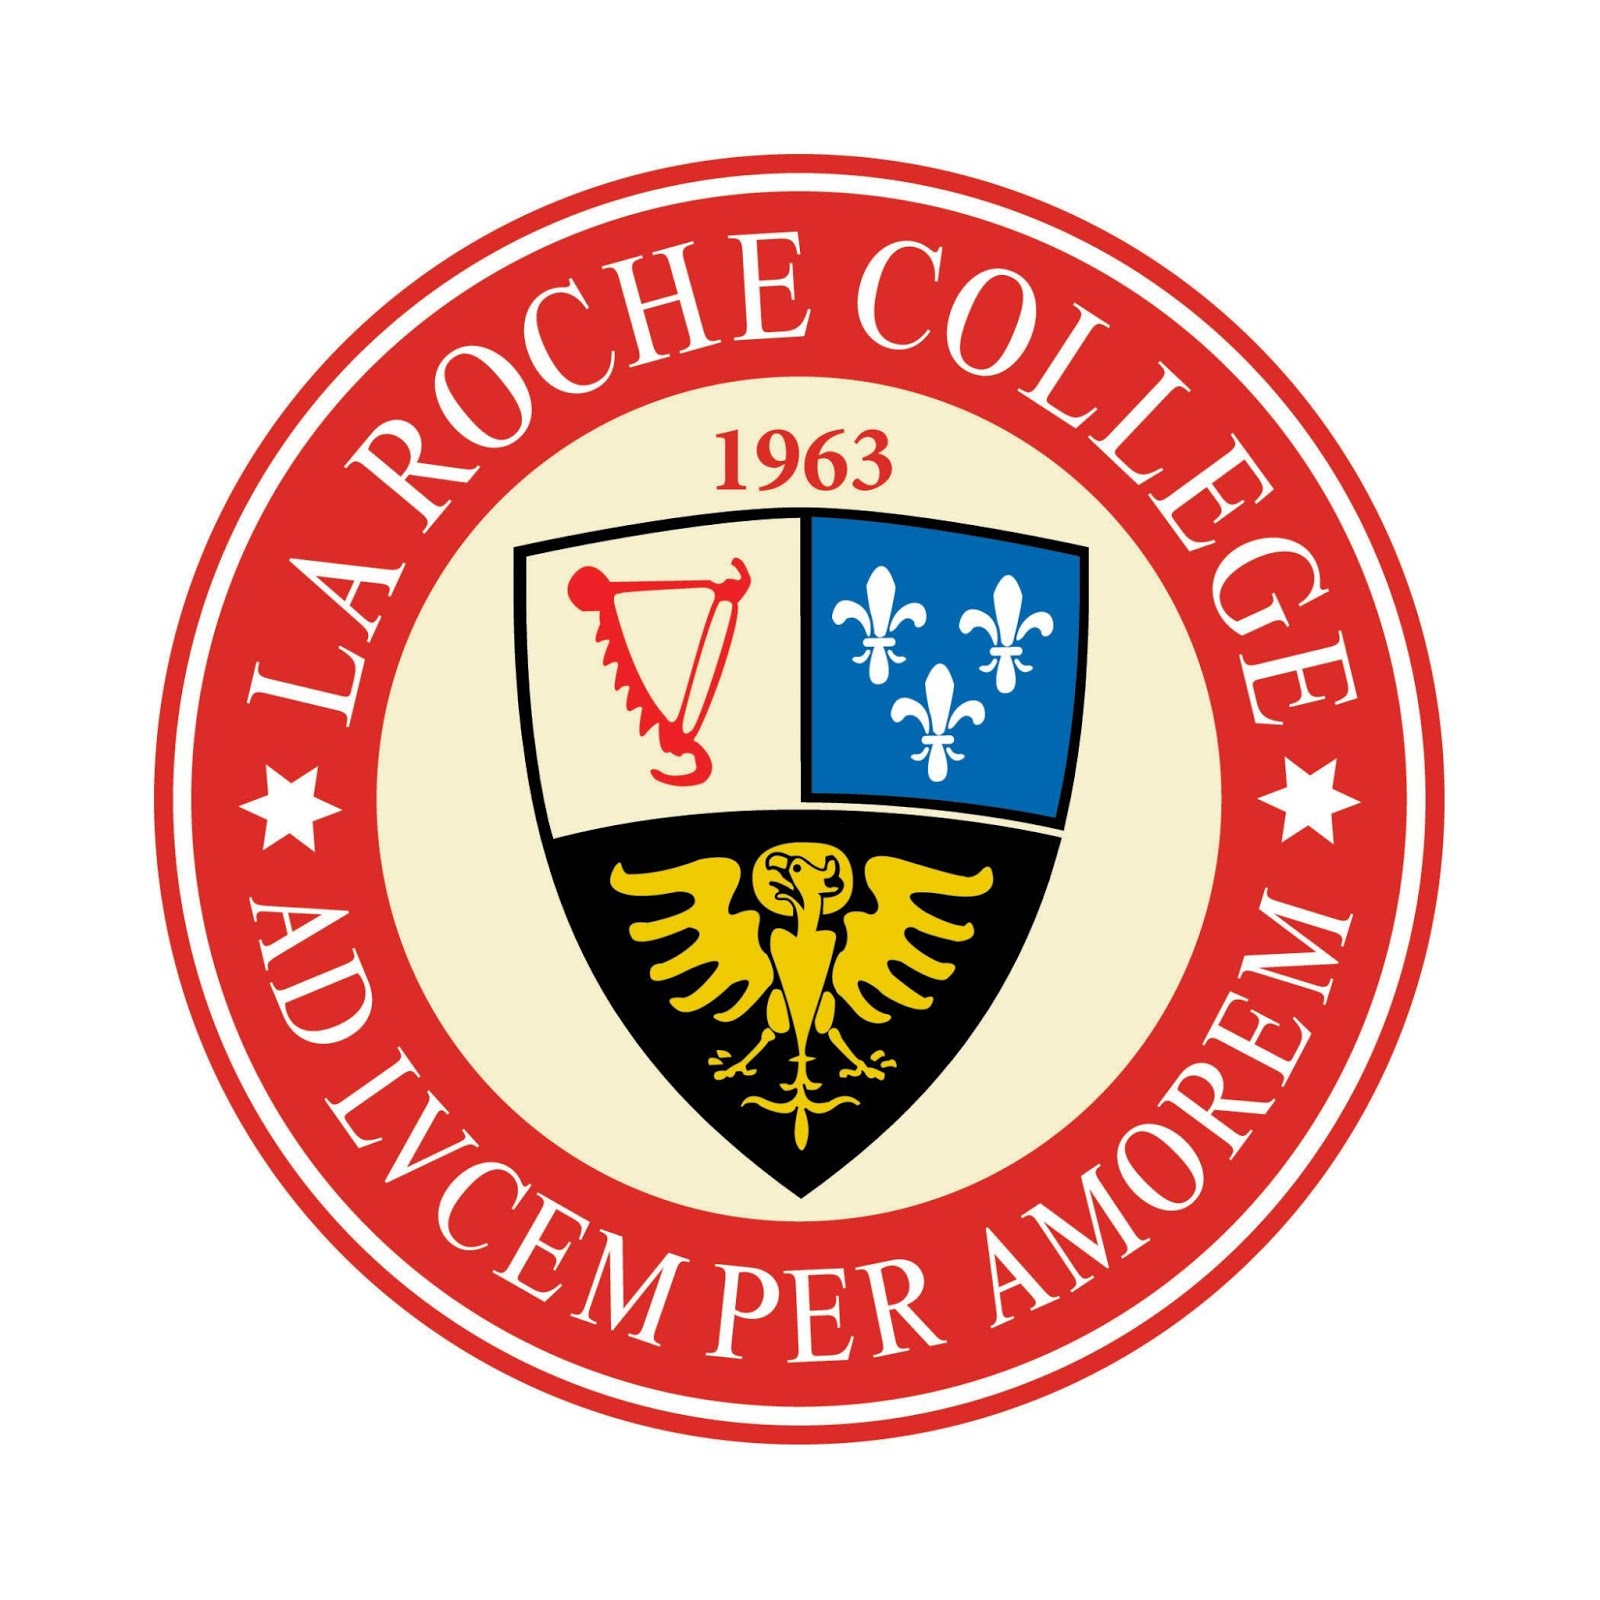 La Roche College MeritBased Scholarships EducationUSAPeruSouthern